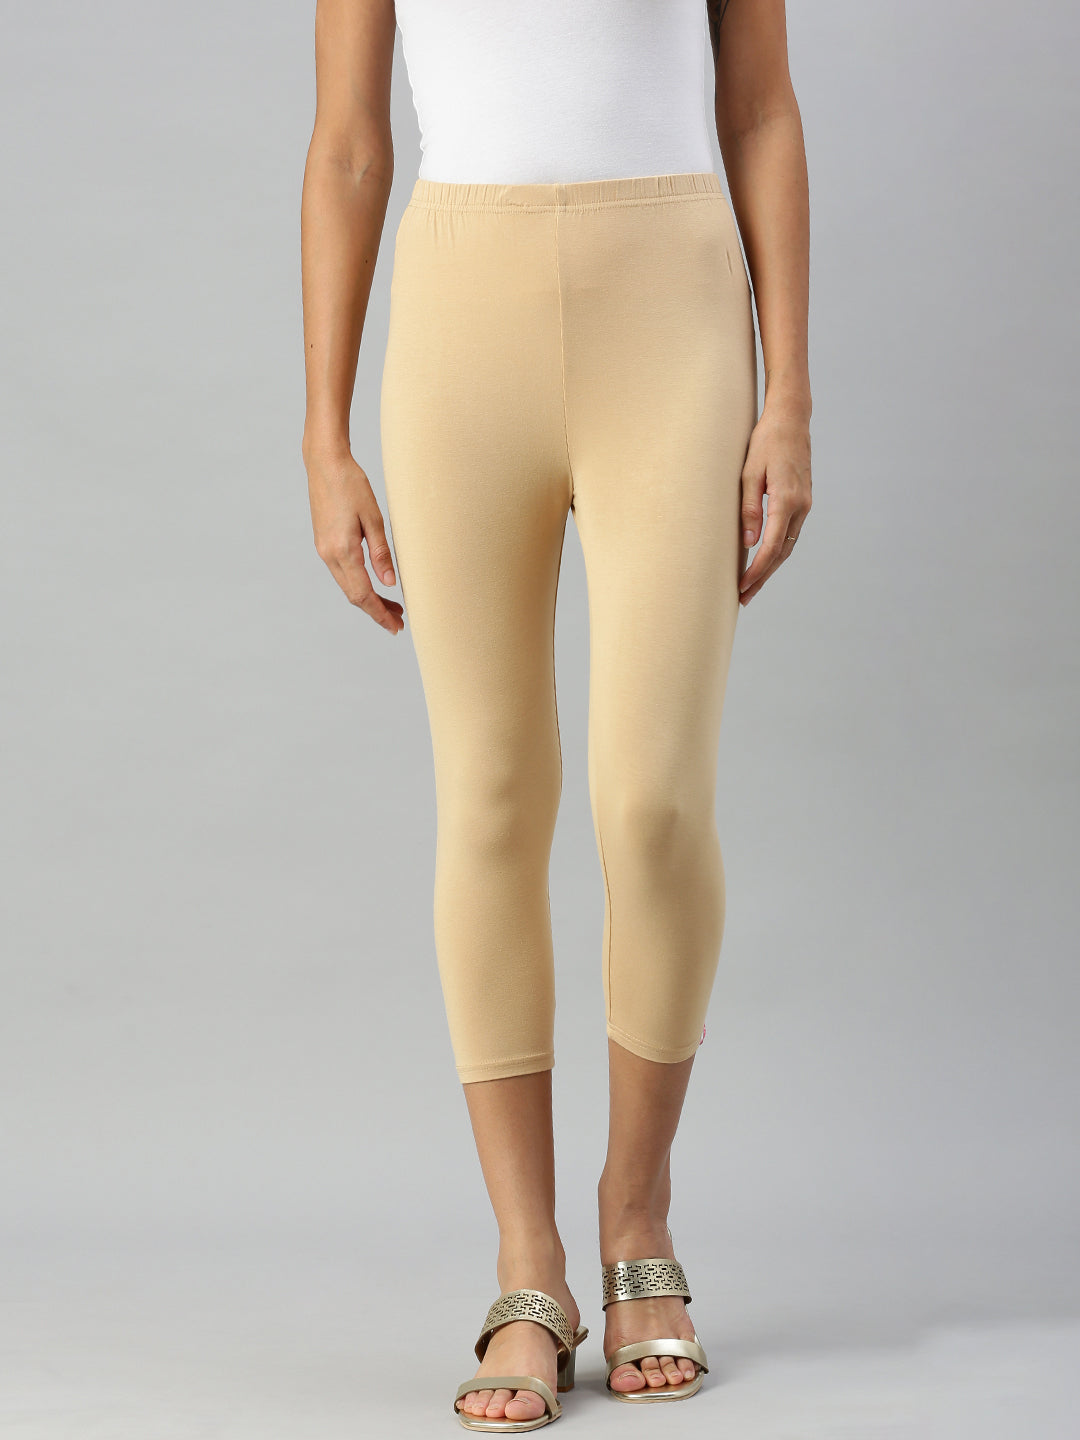 Shop Prisma's Cream Capri Leggings for Comfortable and Stylish Workout Wear